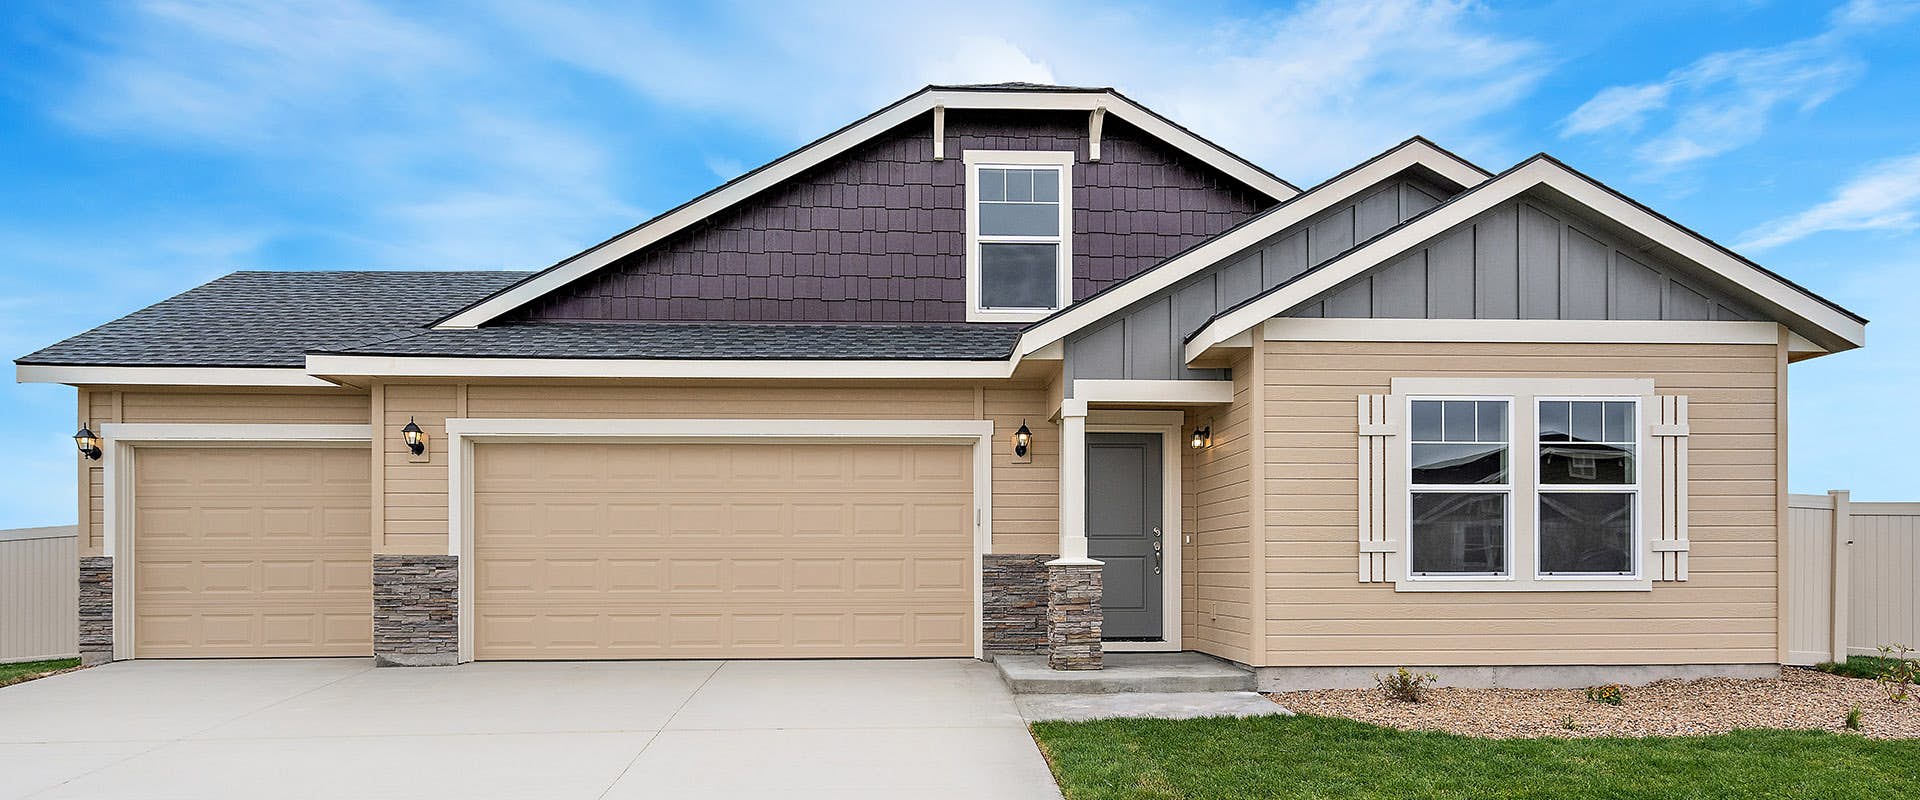 Brookfield Bonus 66 New_Homes_and_Communities_Boise_Idaho_Hubble_Homes1.jpg